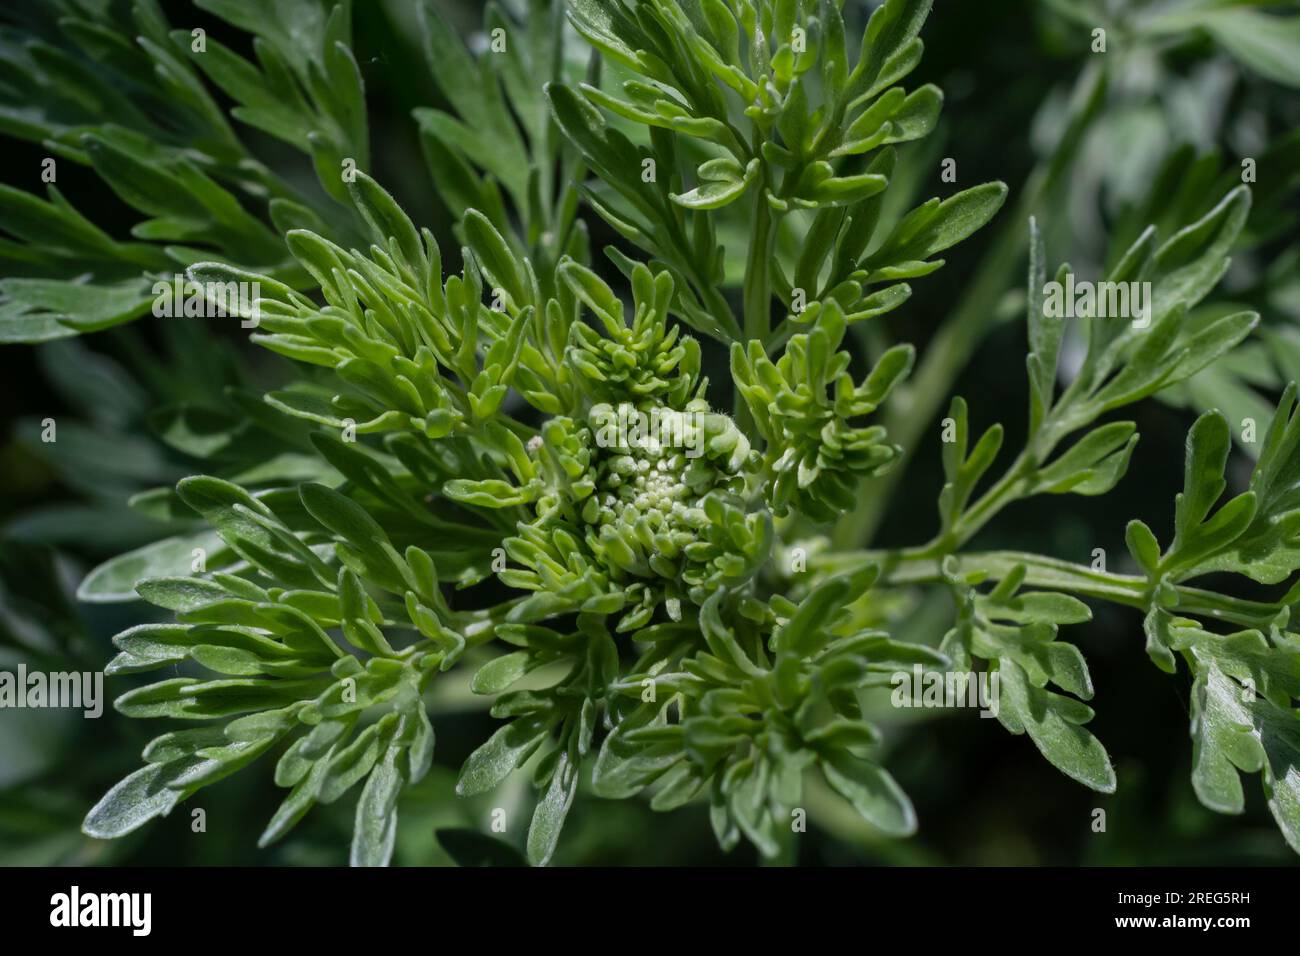 Silbergrüner Wermut hinterlässt Hintergrund. Artemisia absinthium, Absinth-Wermut-Pflanze im Kräuterküchengarten, Nahaufnahme, Makro. Stockfoto